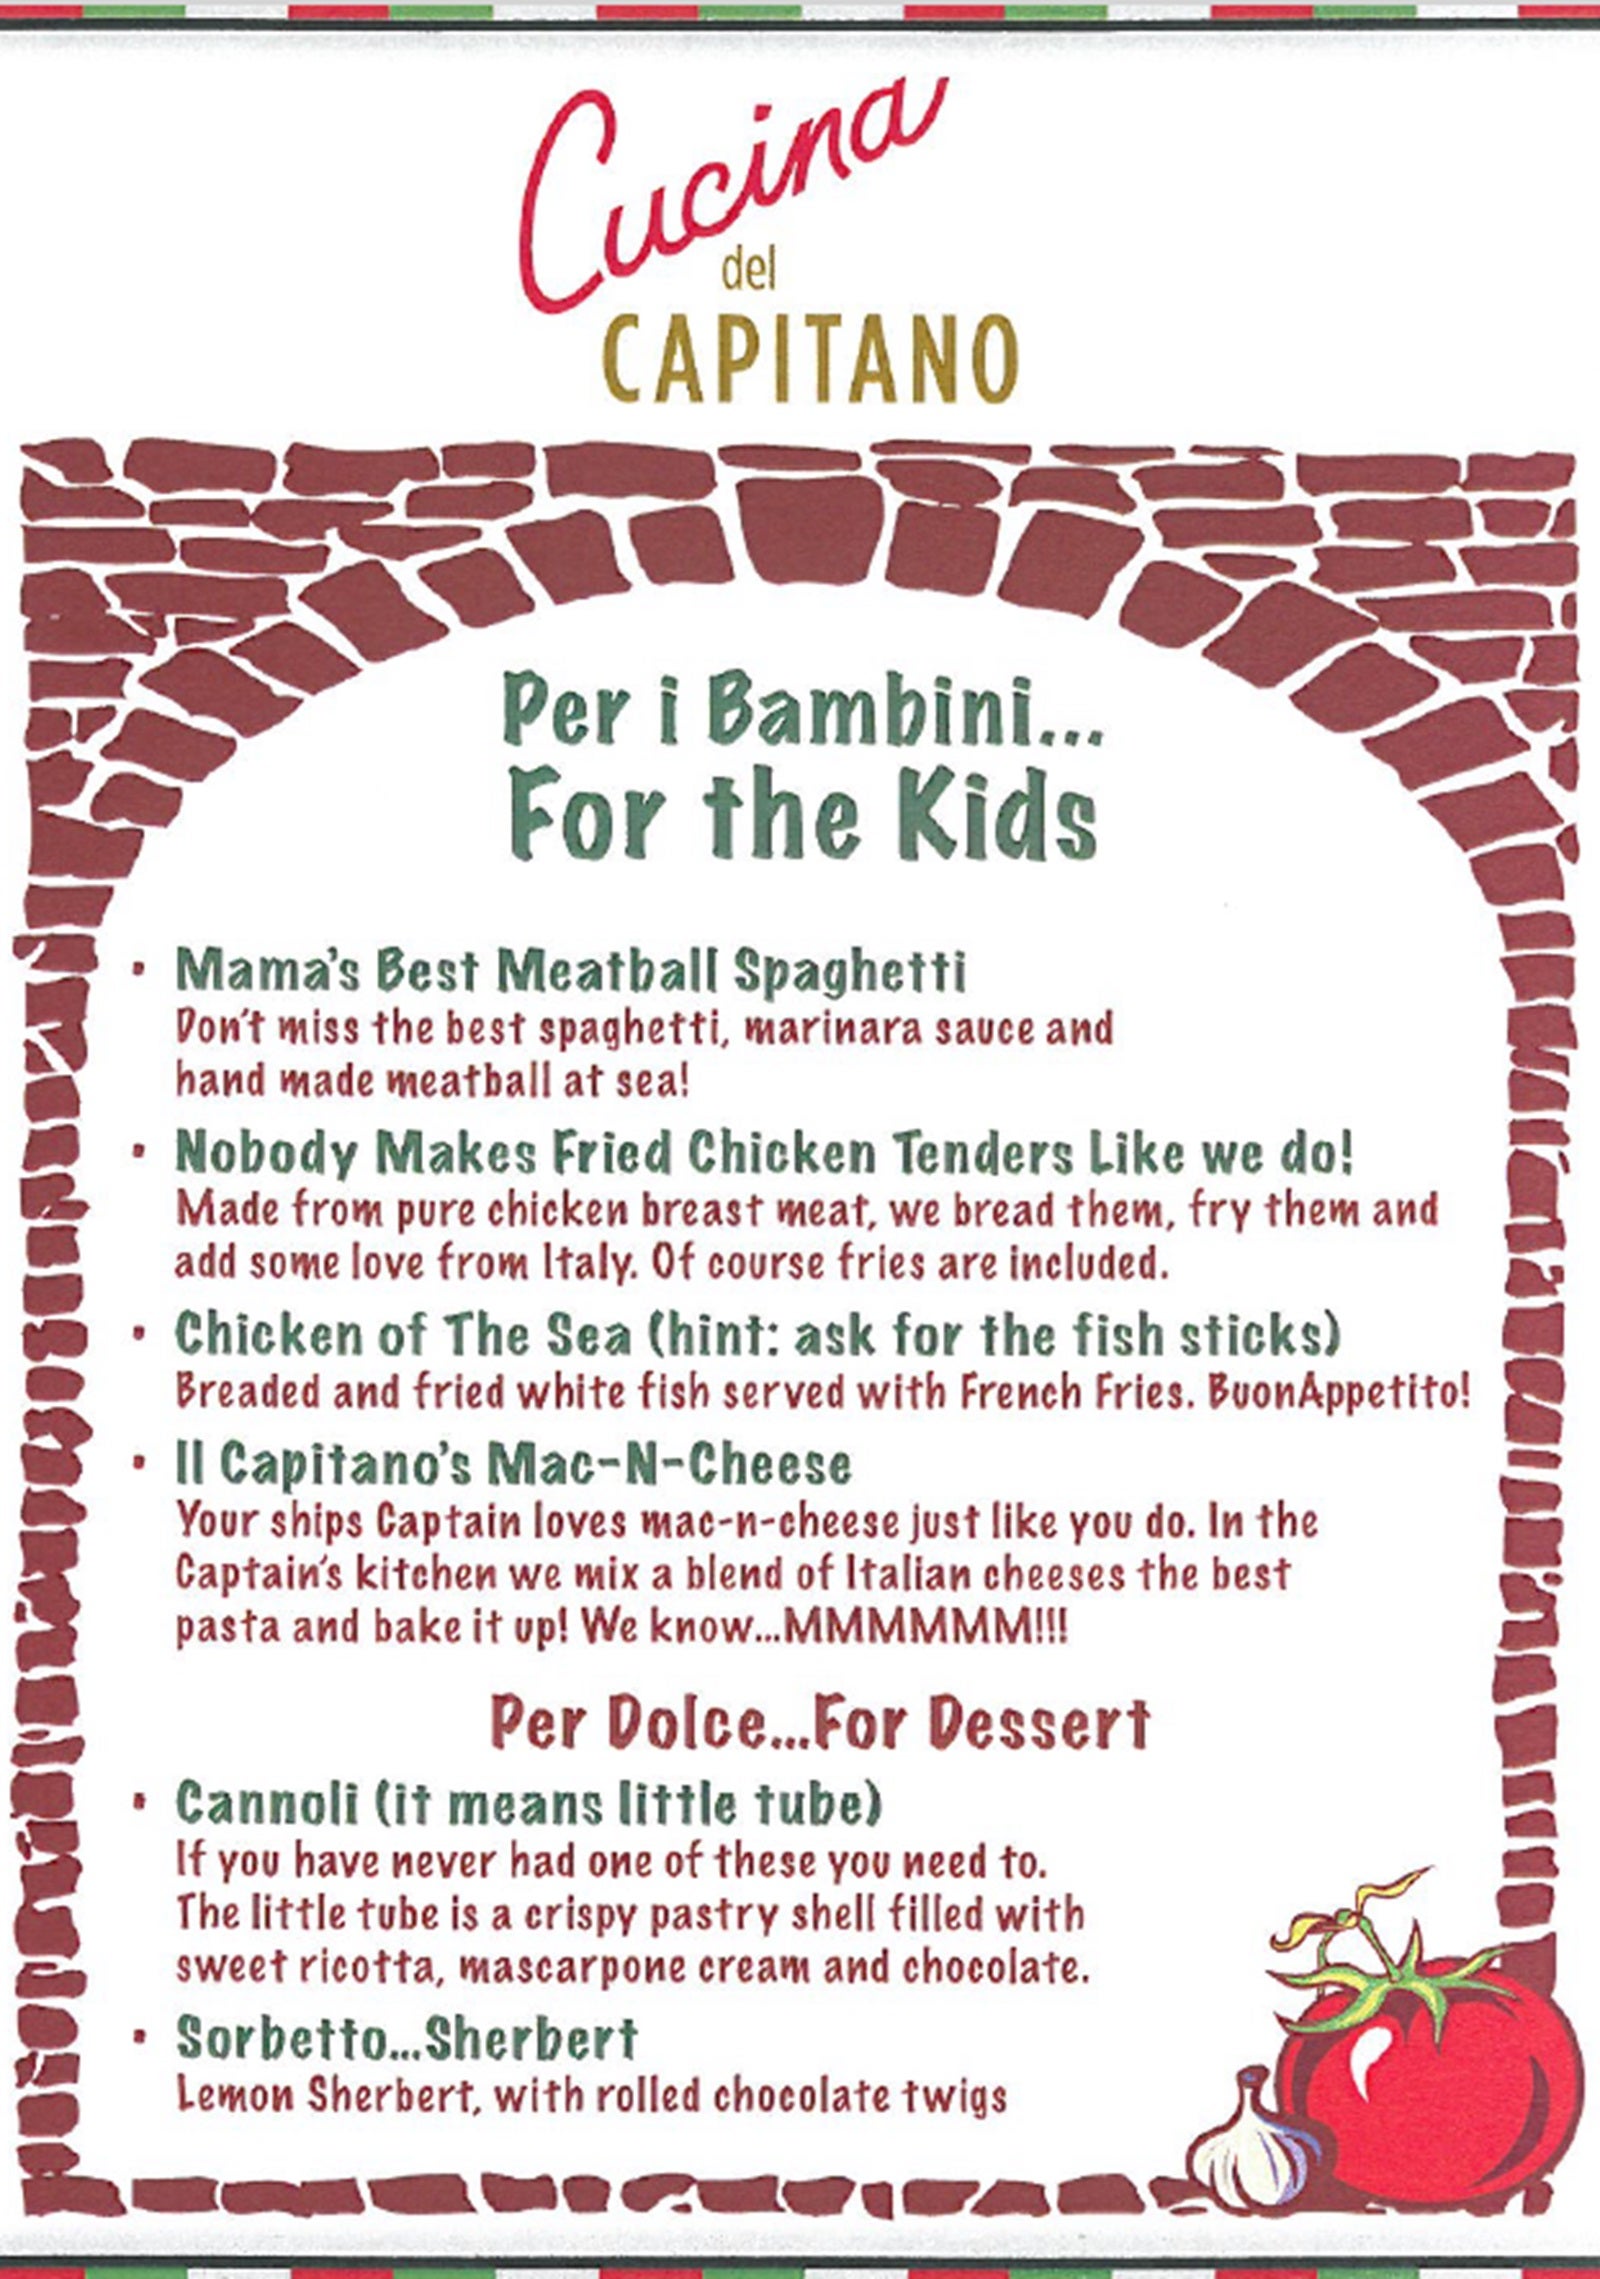 A children's menu from Carnival Cruise Line restaurant Cucina del Capitano